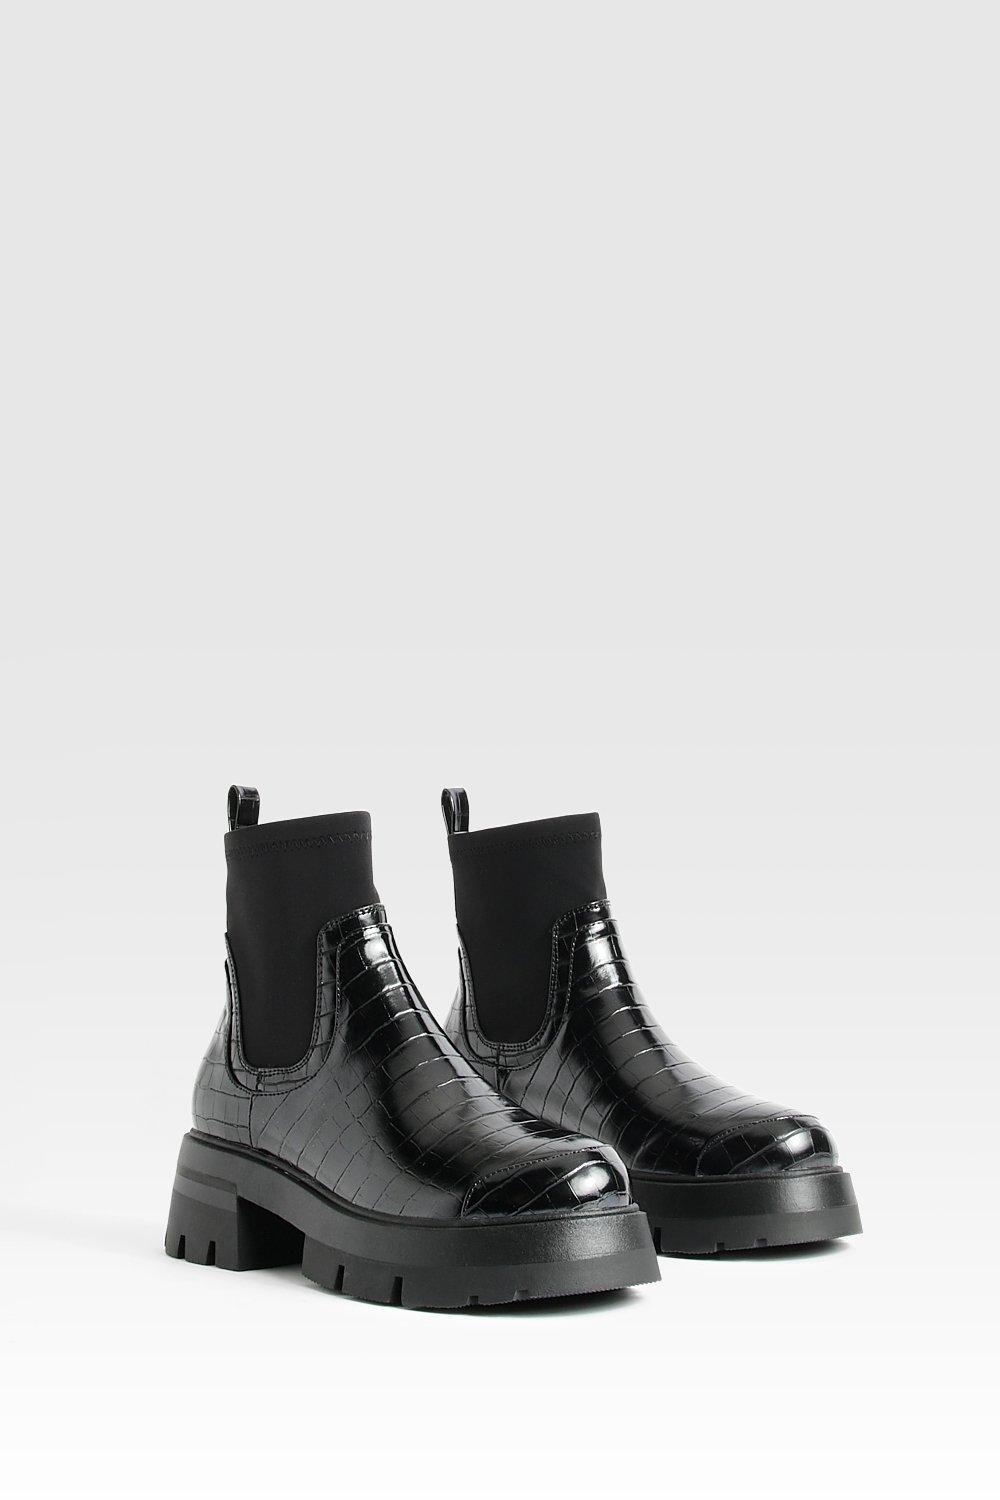 wide fit neoprene panel croc chelsea boots - noir - 39, noir